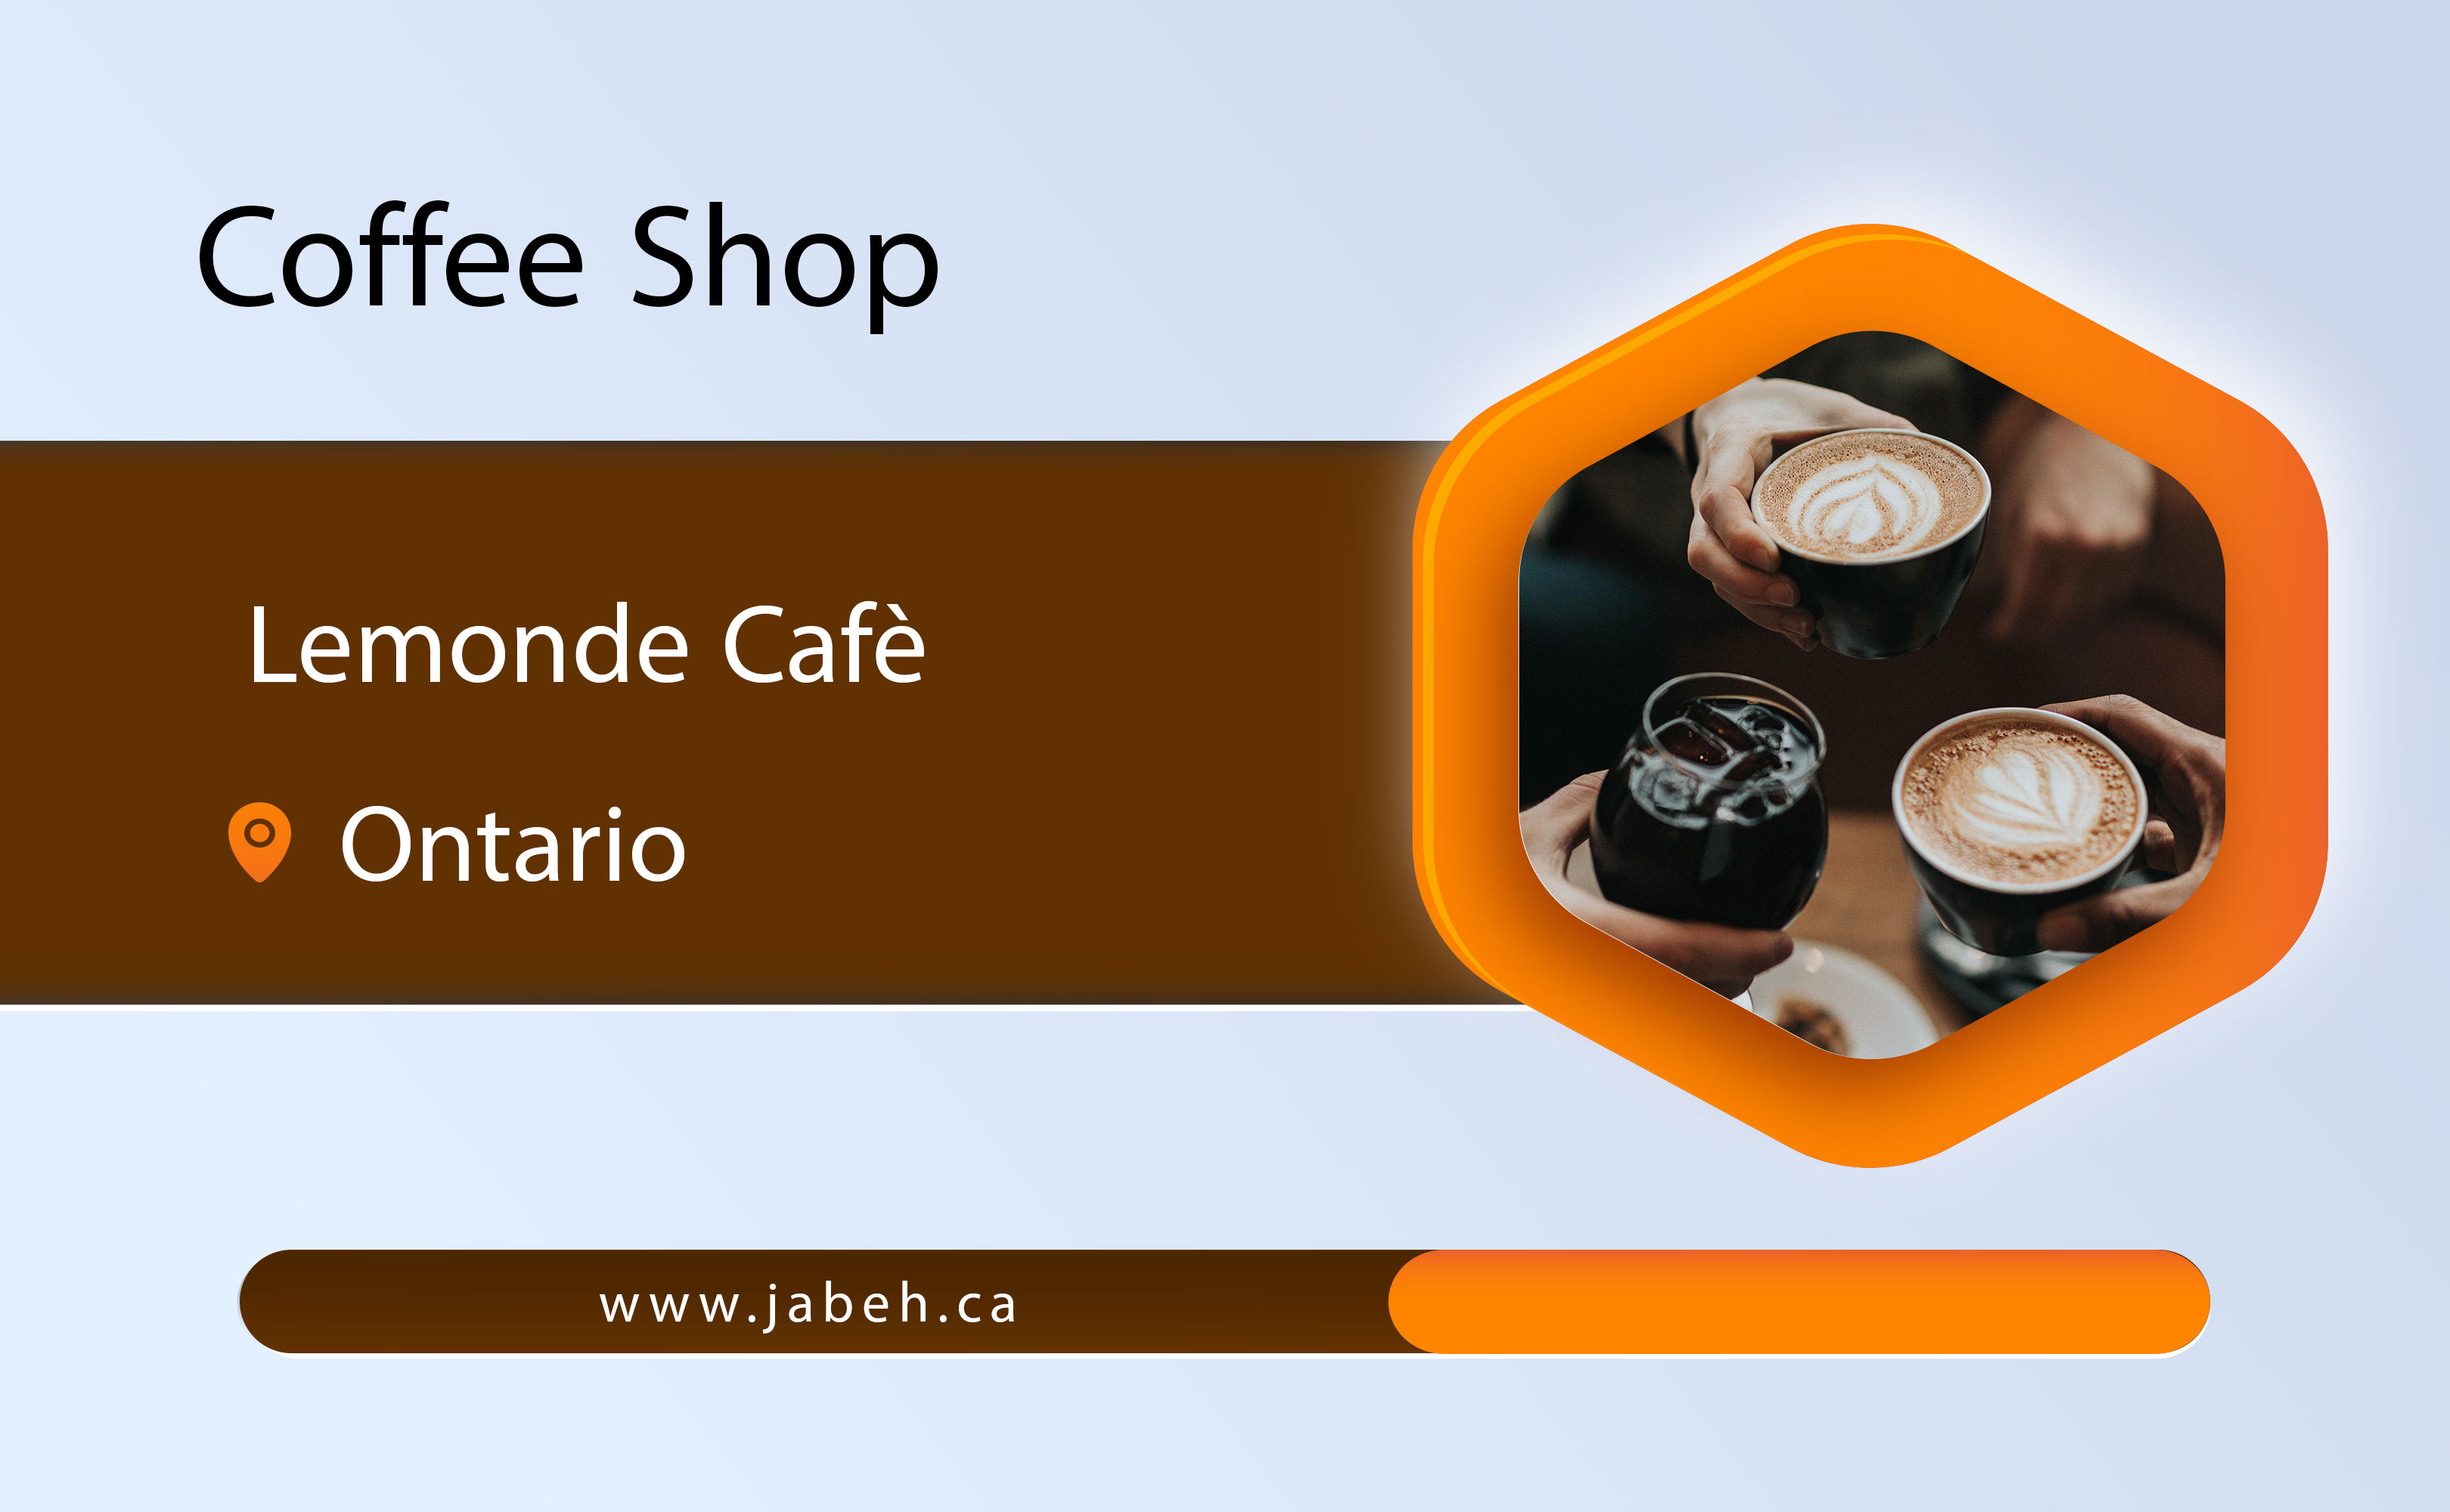 Cafe Lomond in Ontario